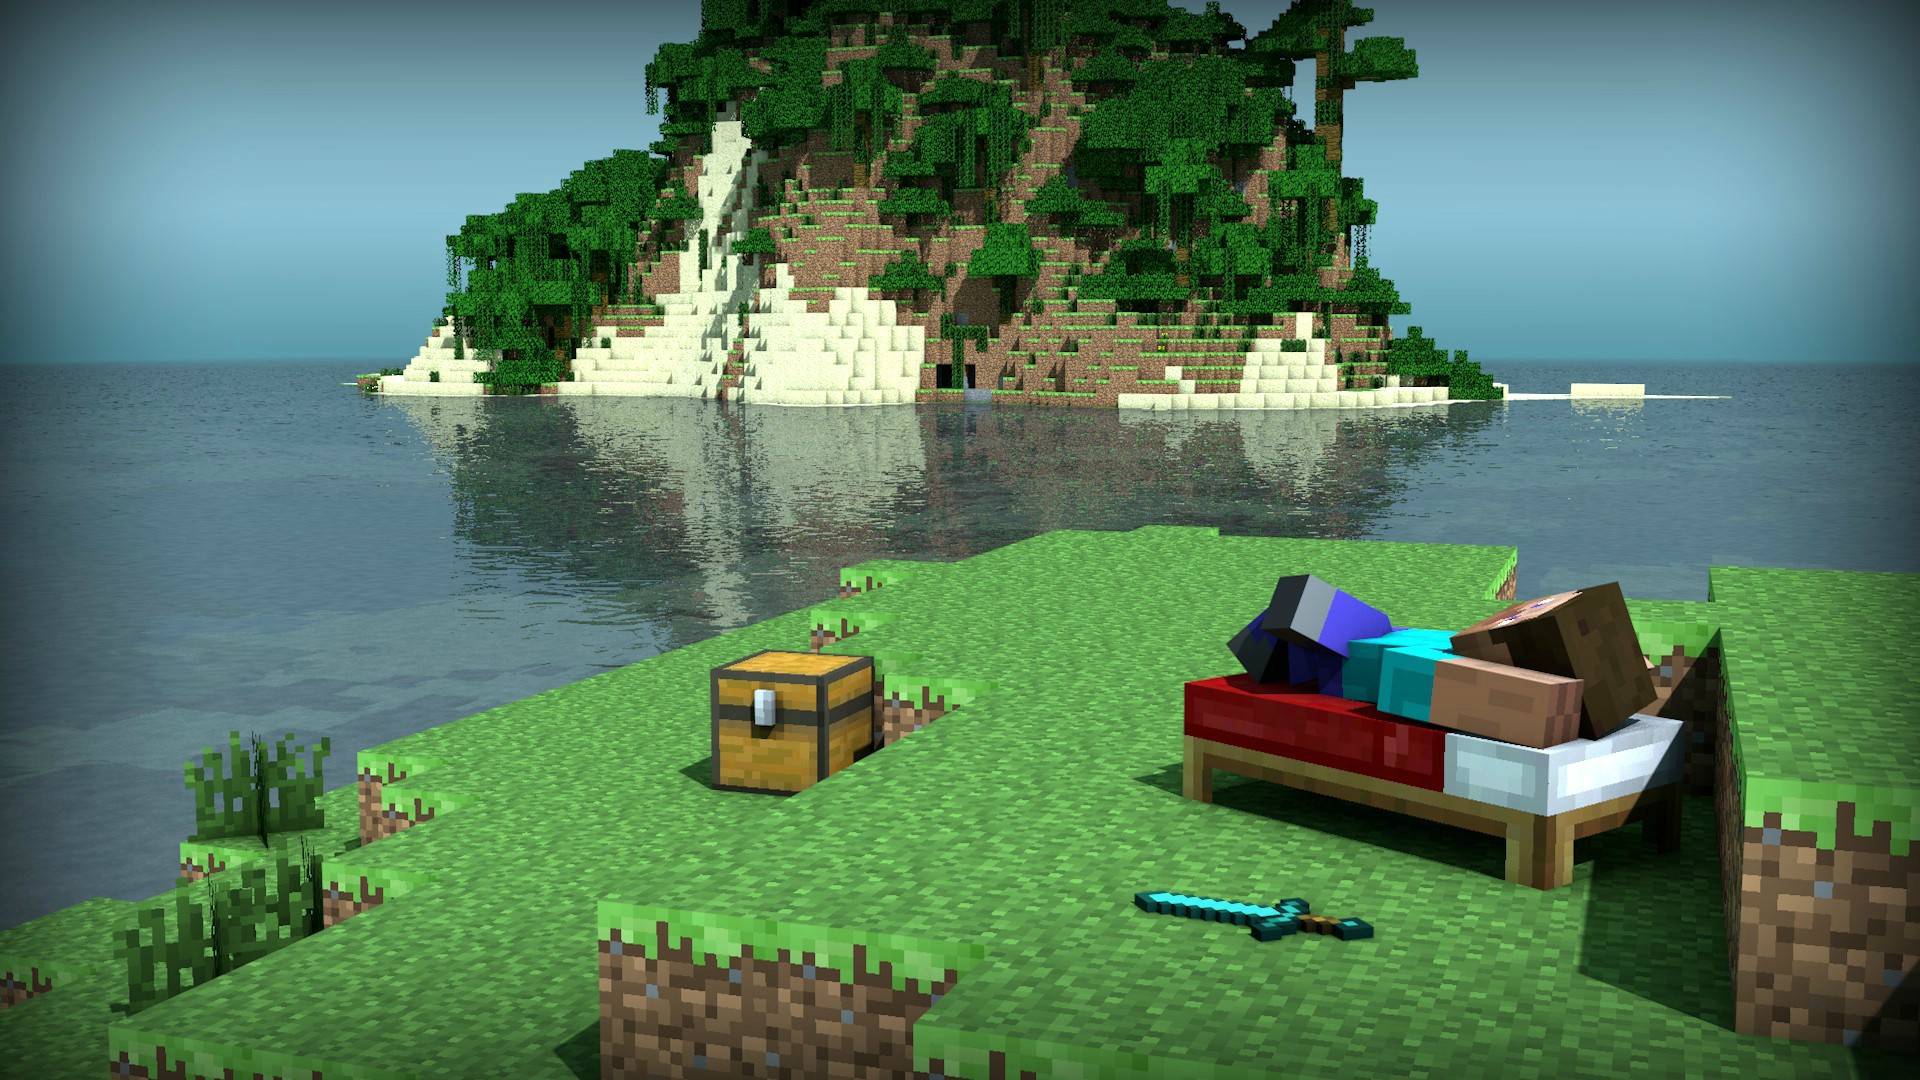 Relaxing Steve - Minecraft Gallery Wallpaper (31052614) - Fanpop